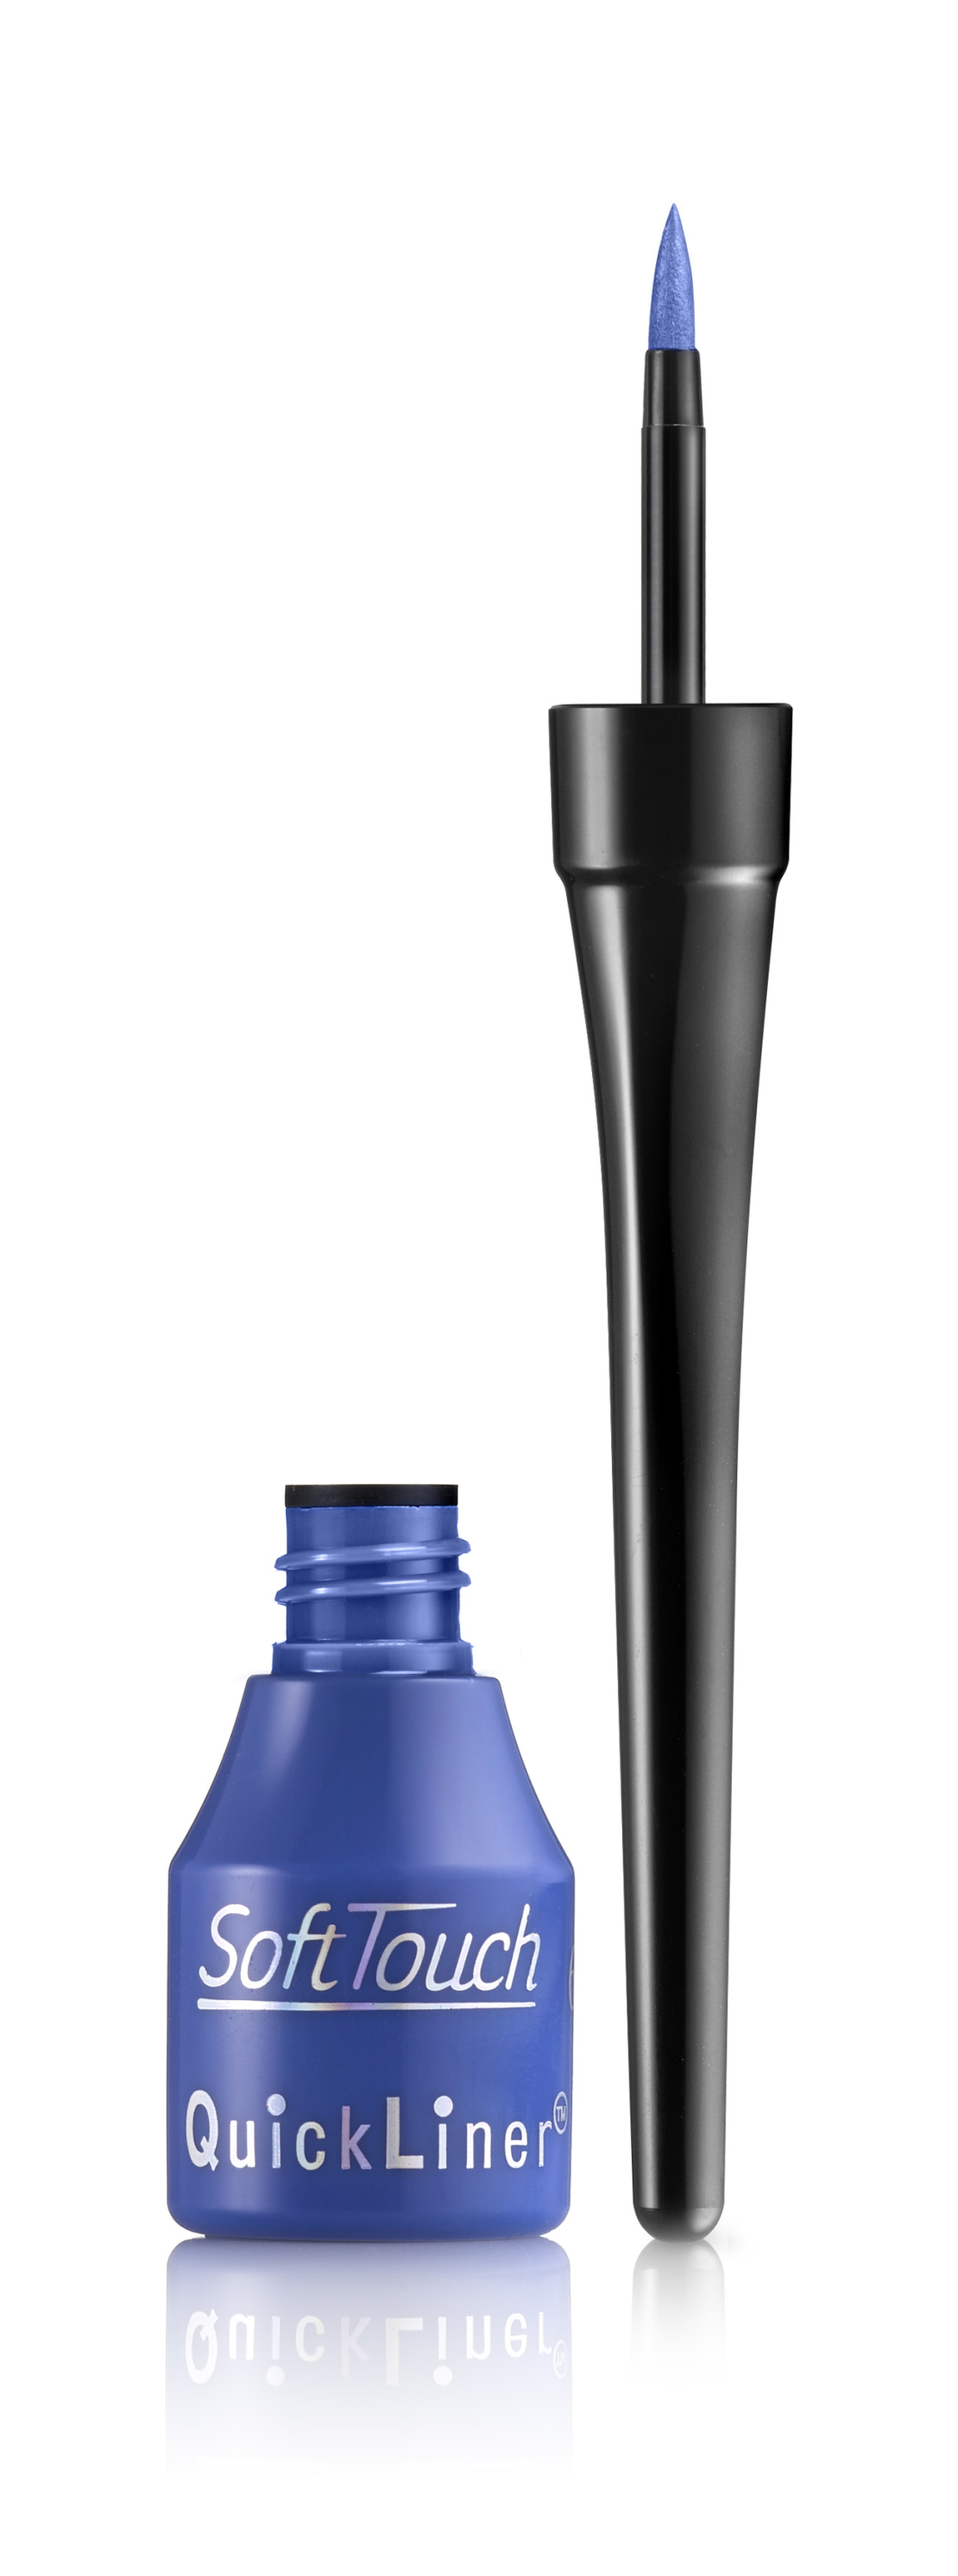 Soft Touch אייליינר נוזלי מתייבש במהירות מסדרת QuickLiner בצבע כחול